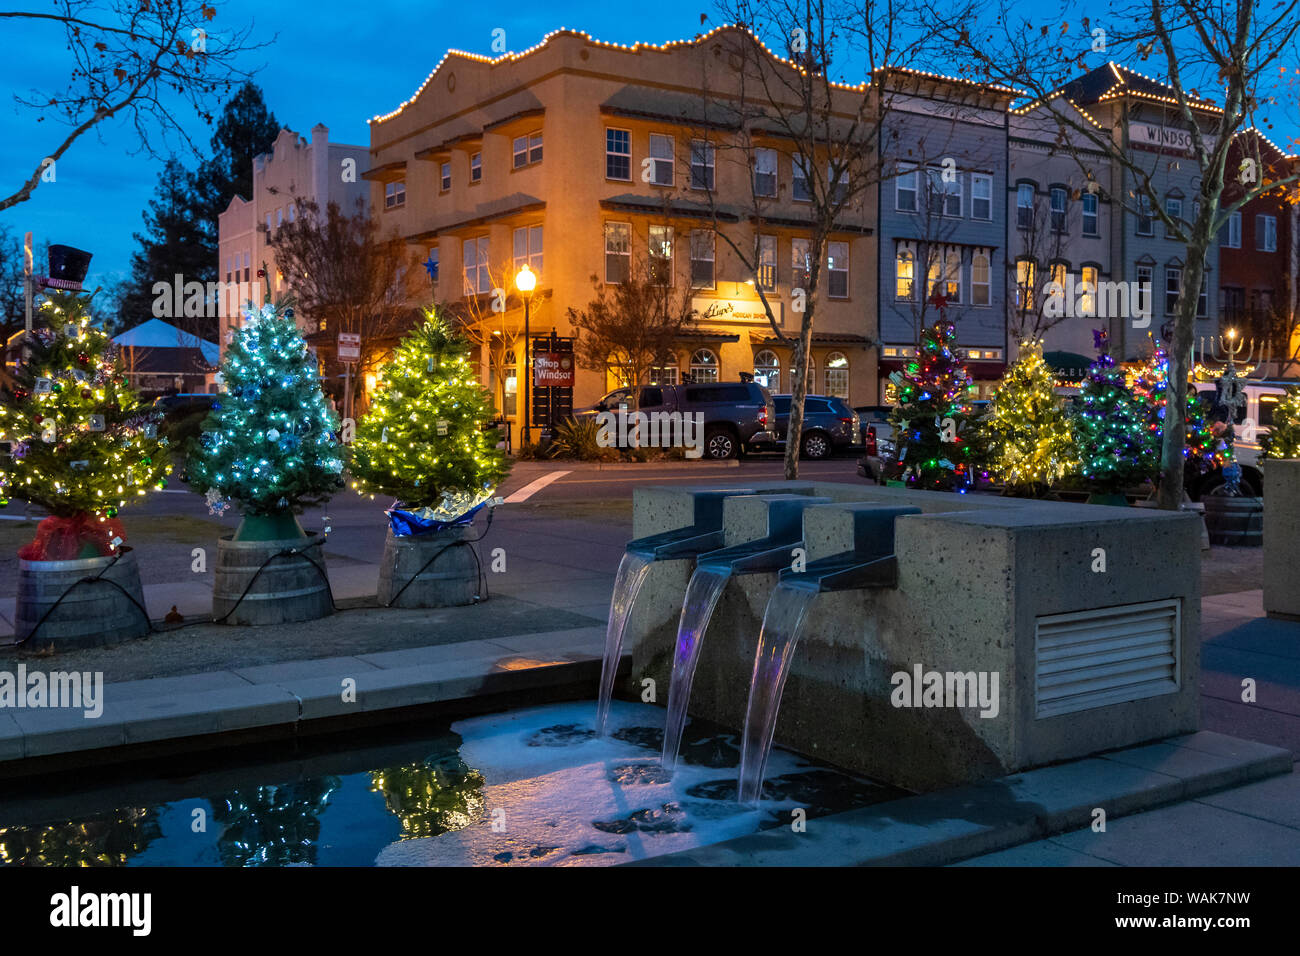 Christmas decorations on the main street of Windsor, California Stock Photo